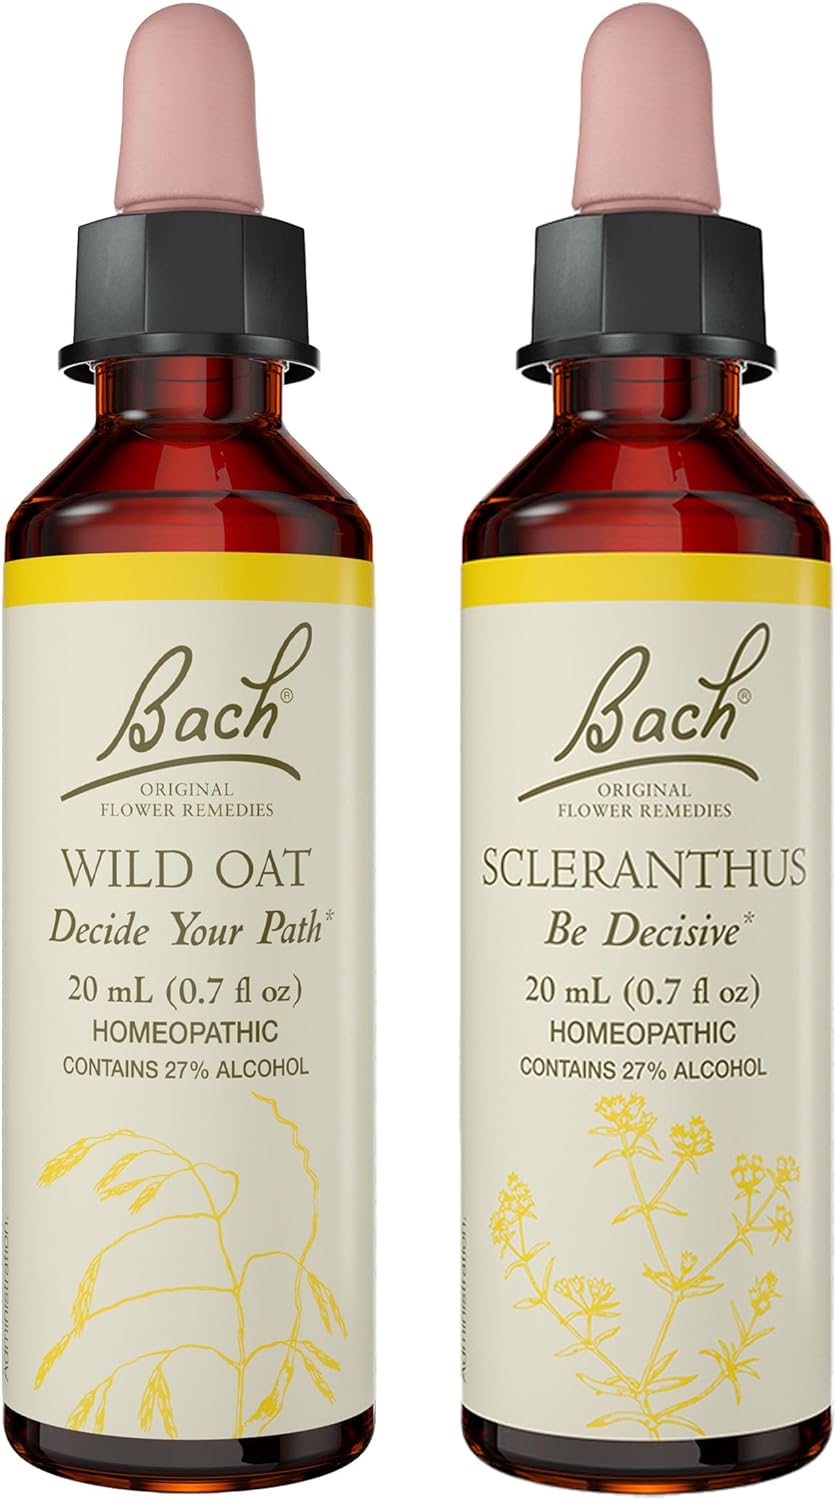 Bach Original Flower Remedies 2-Pack, "Decide Your Path" - Wild Oat, Scleranthus, Homeopathic Flower Essences, Vegan, 20mL Dropper x2, Empty Mixing Bottle x1